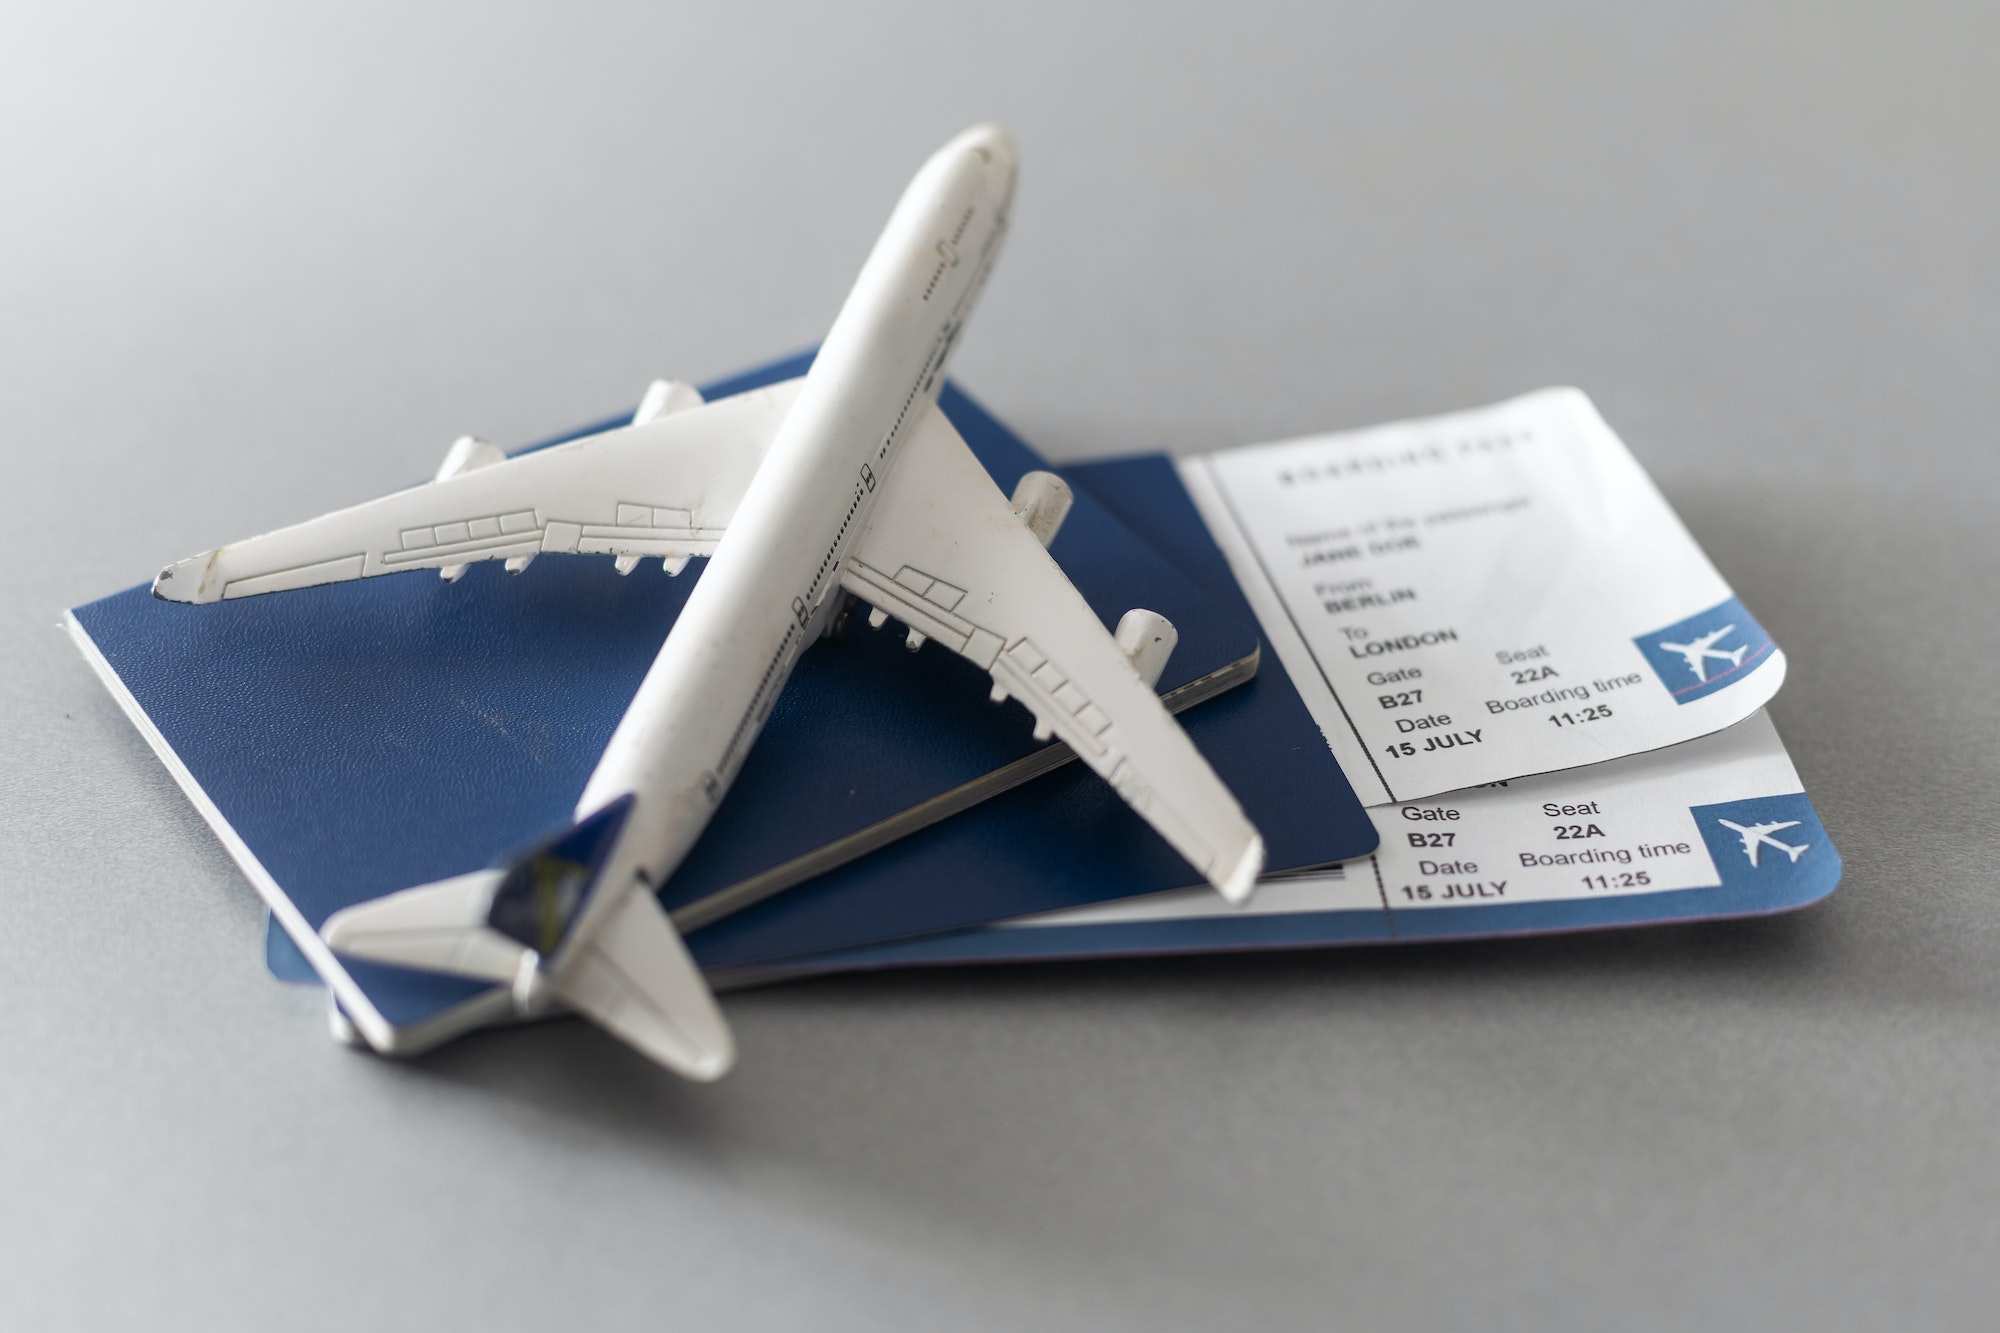 Tourism & air ticketing